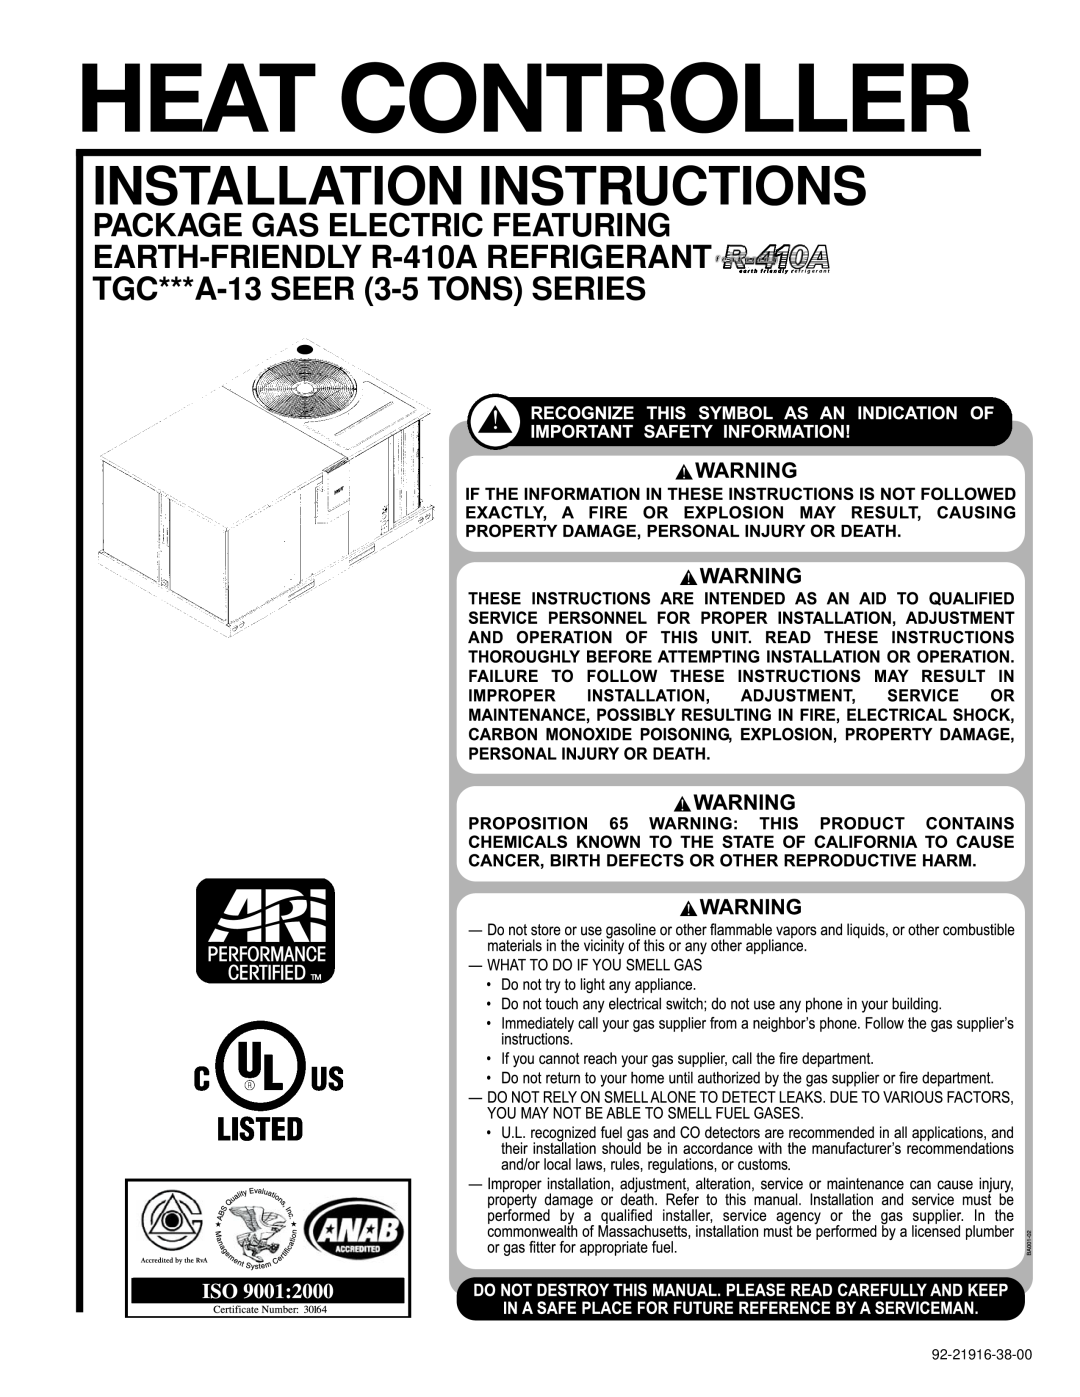 Heat Controller A-13 installation instructions Heat Controller, Installation Instructions, e f r i g e r a n t 